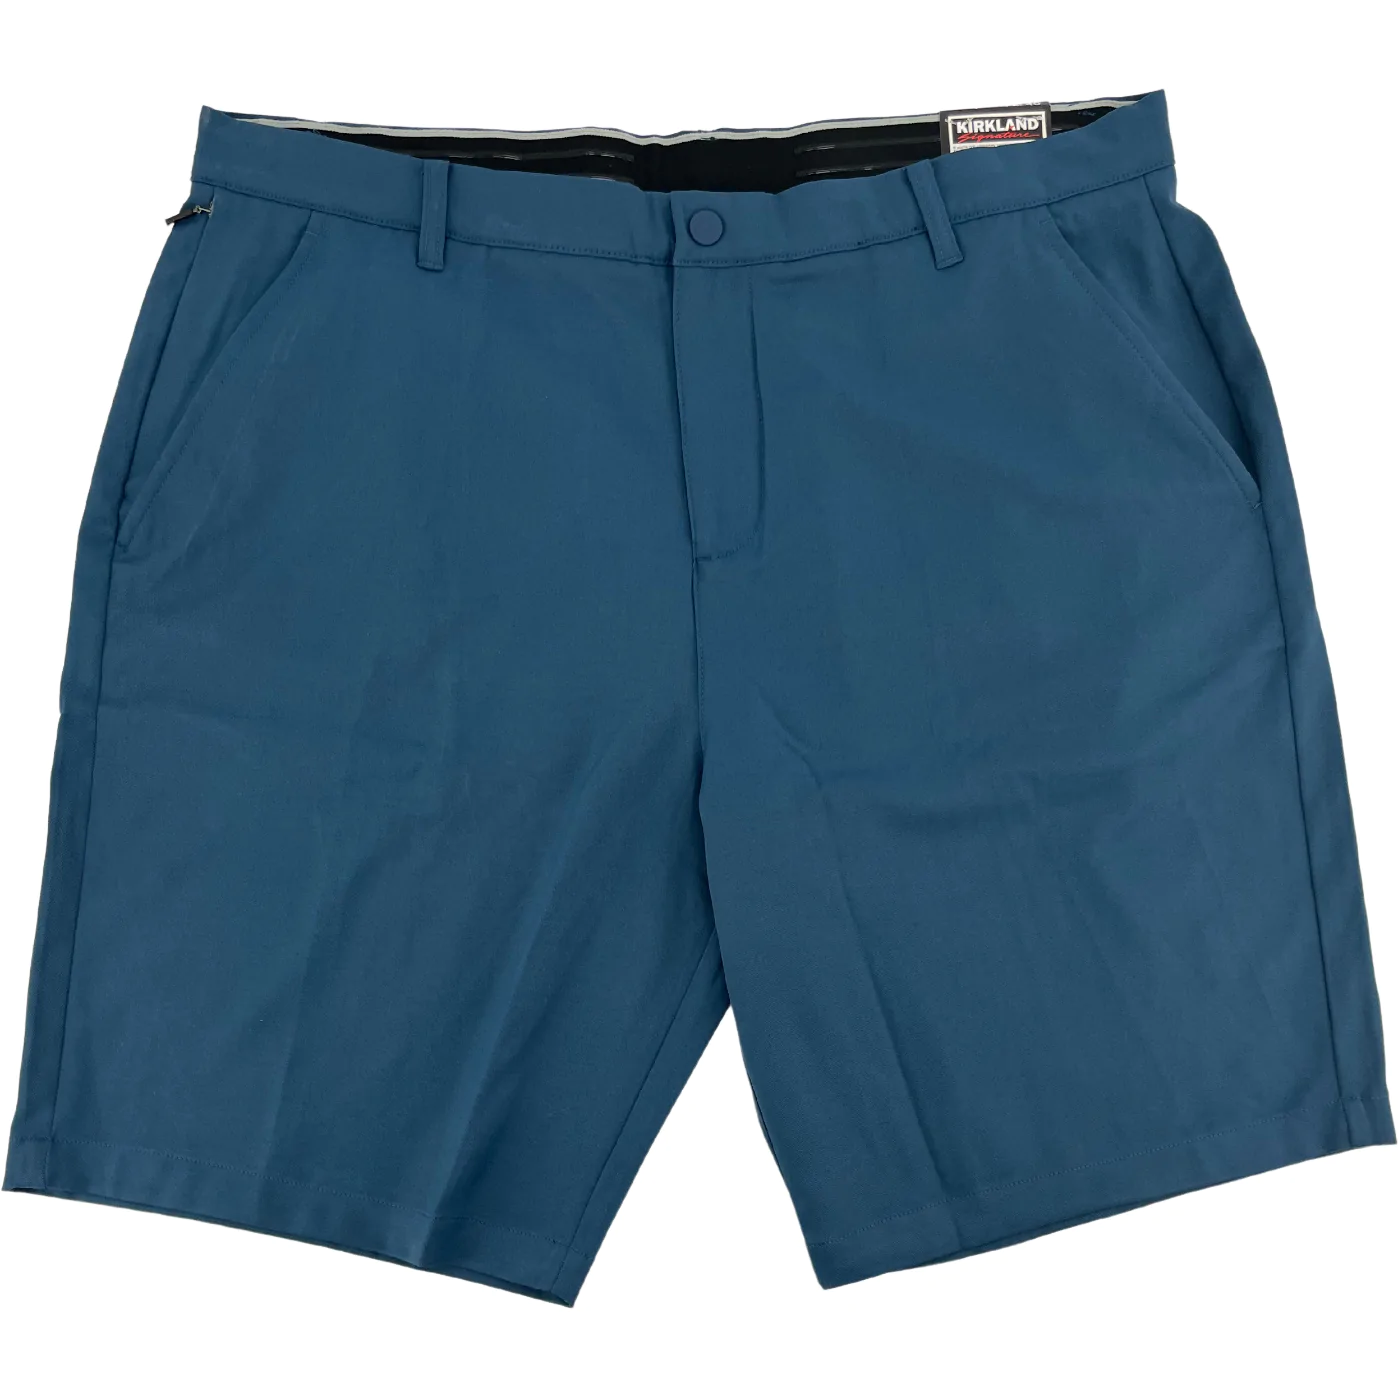 Kirkland Men's Shorts / Performance Shorts / Blue / Various Sizes